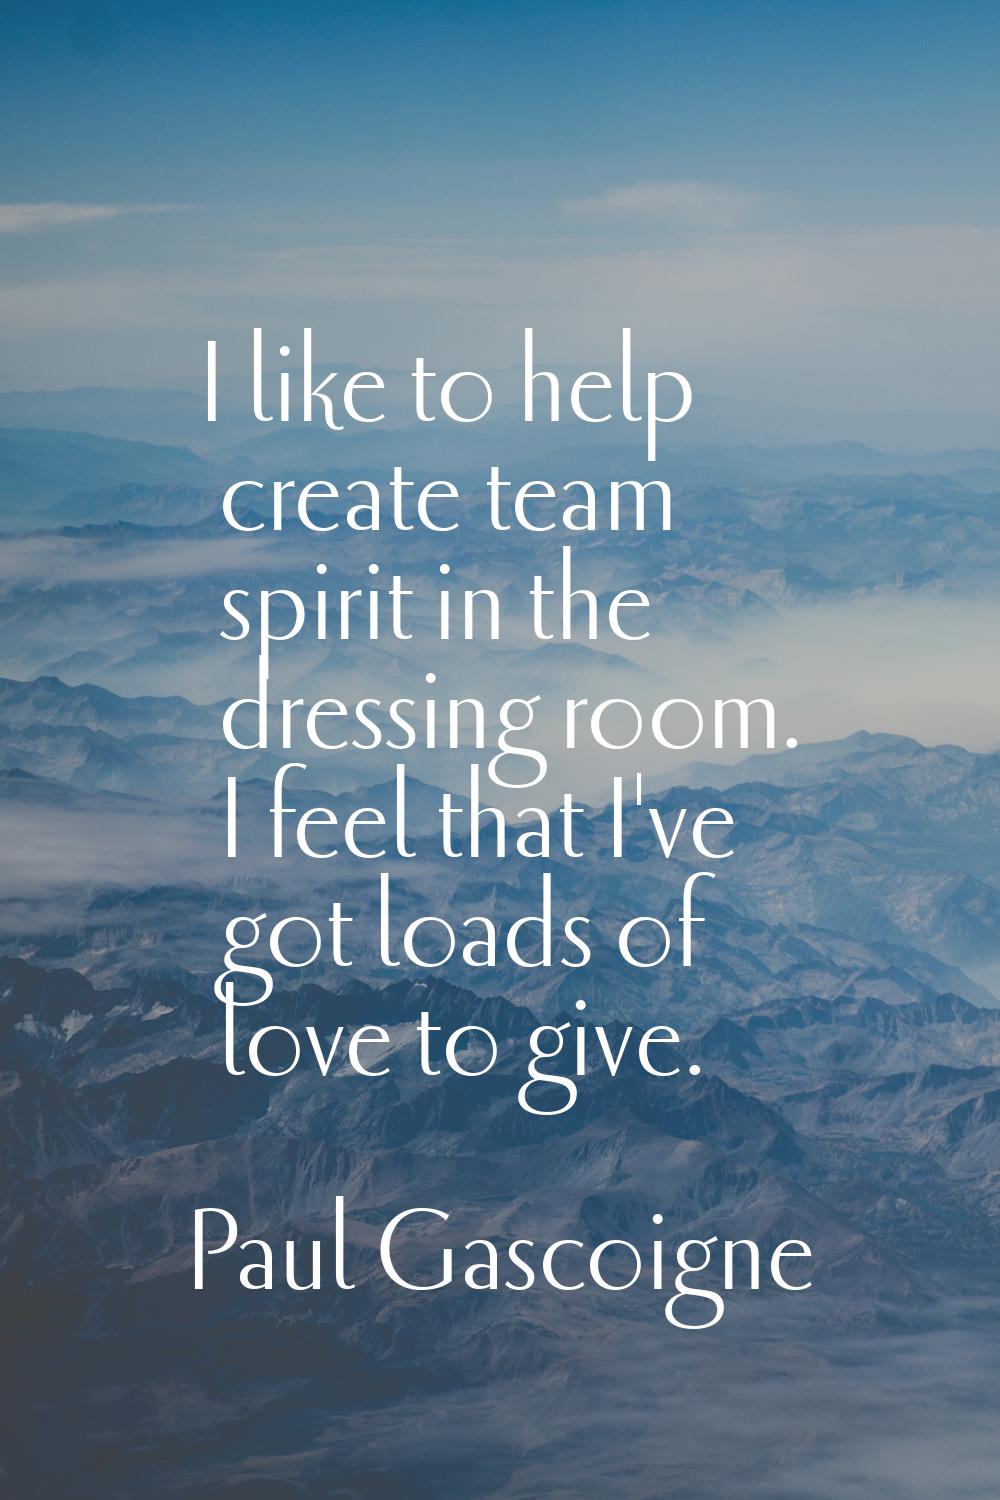 I like to help create team spirit in the dressing room. I feel that I've got loads of love to give.